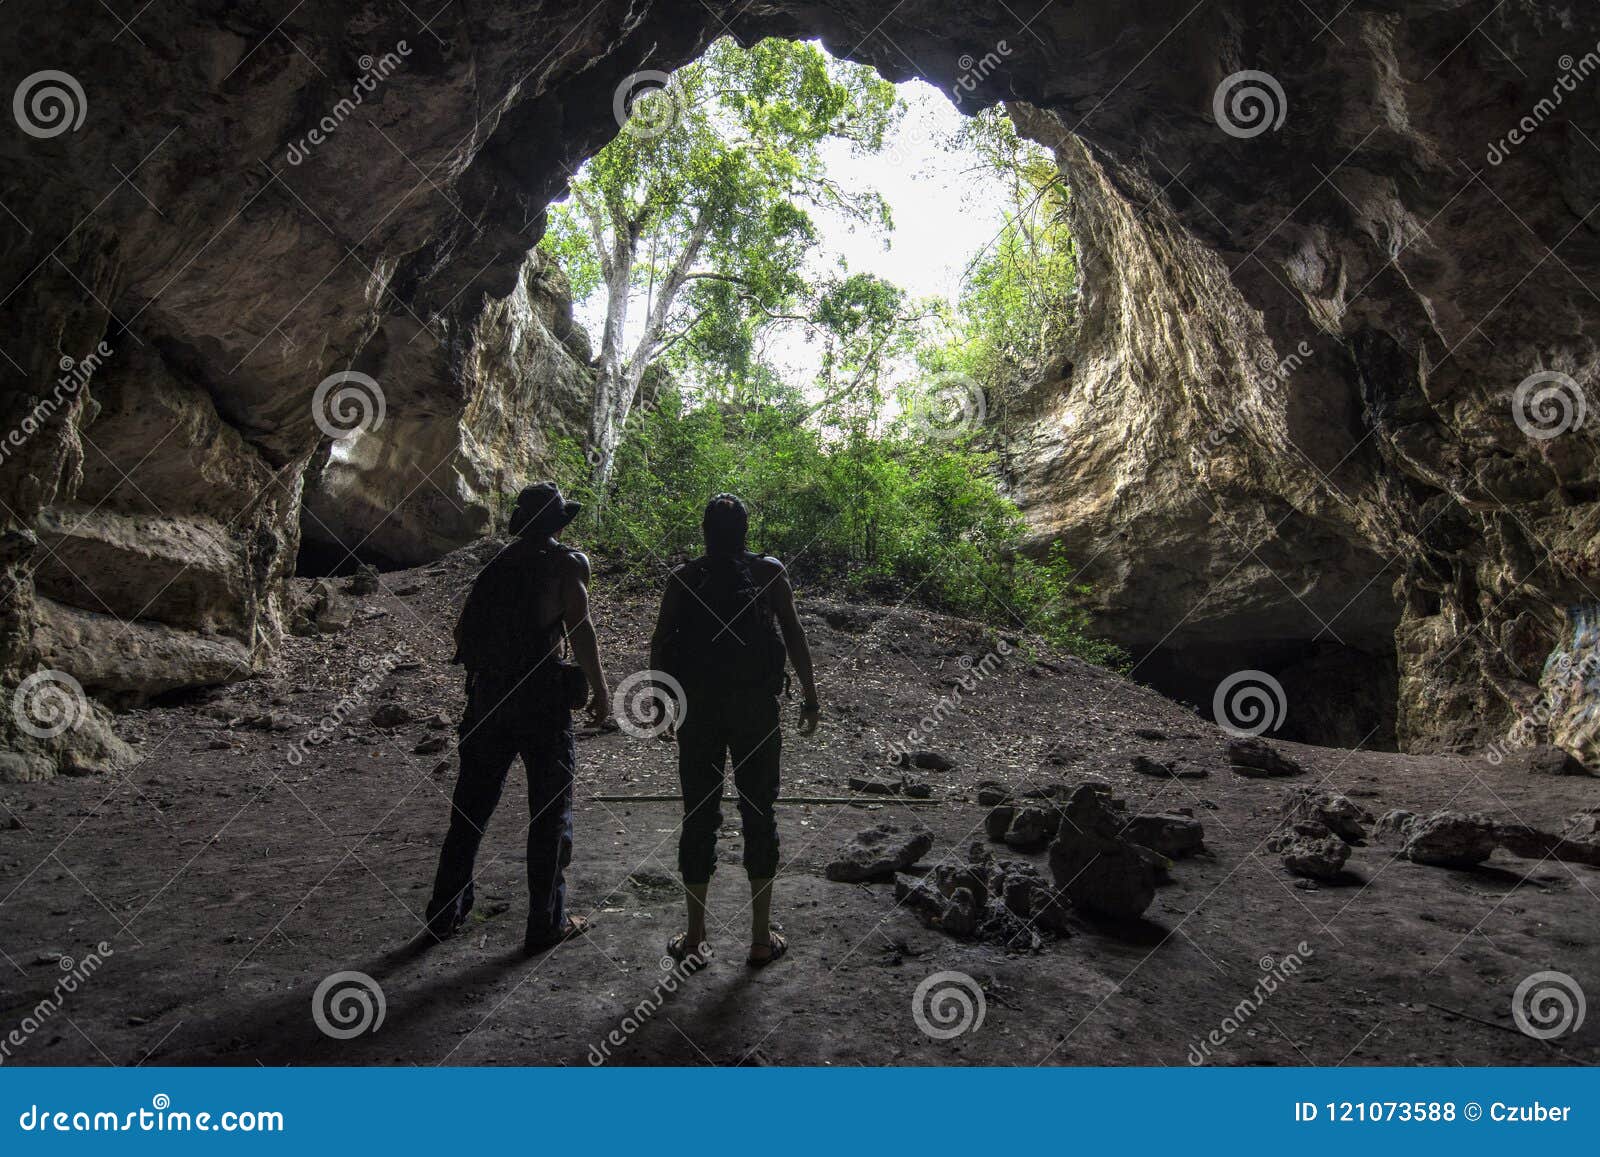 epic cave adventure in chiapas, mexico